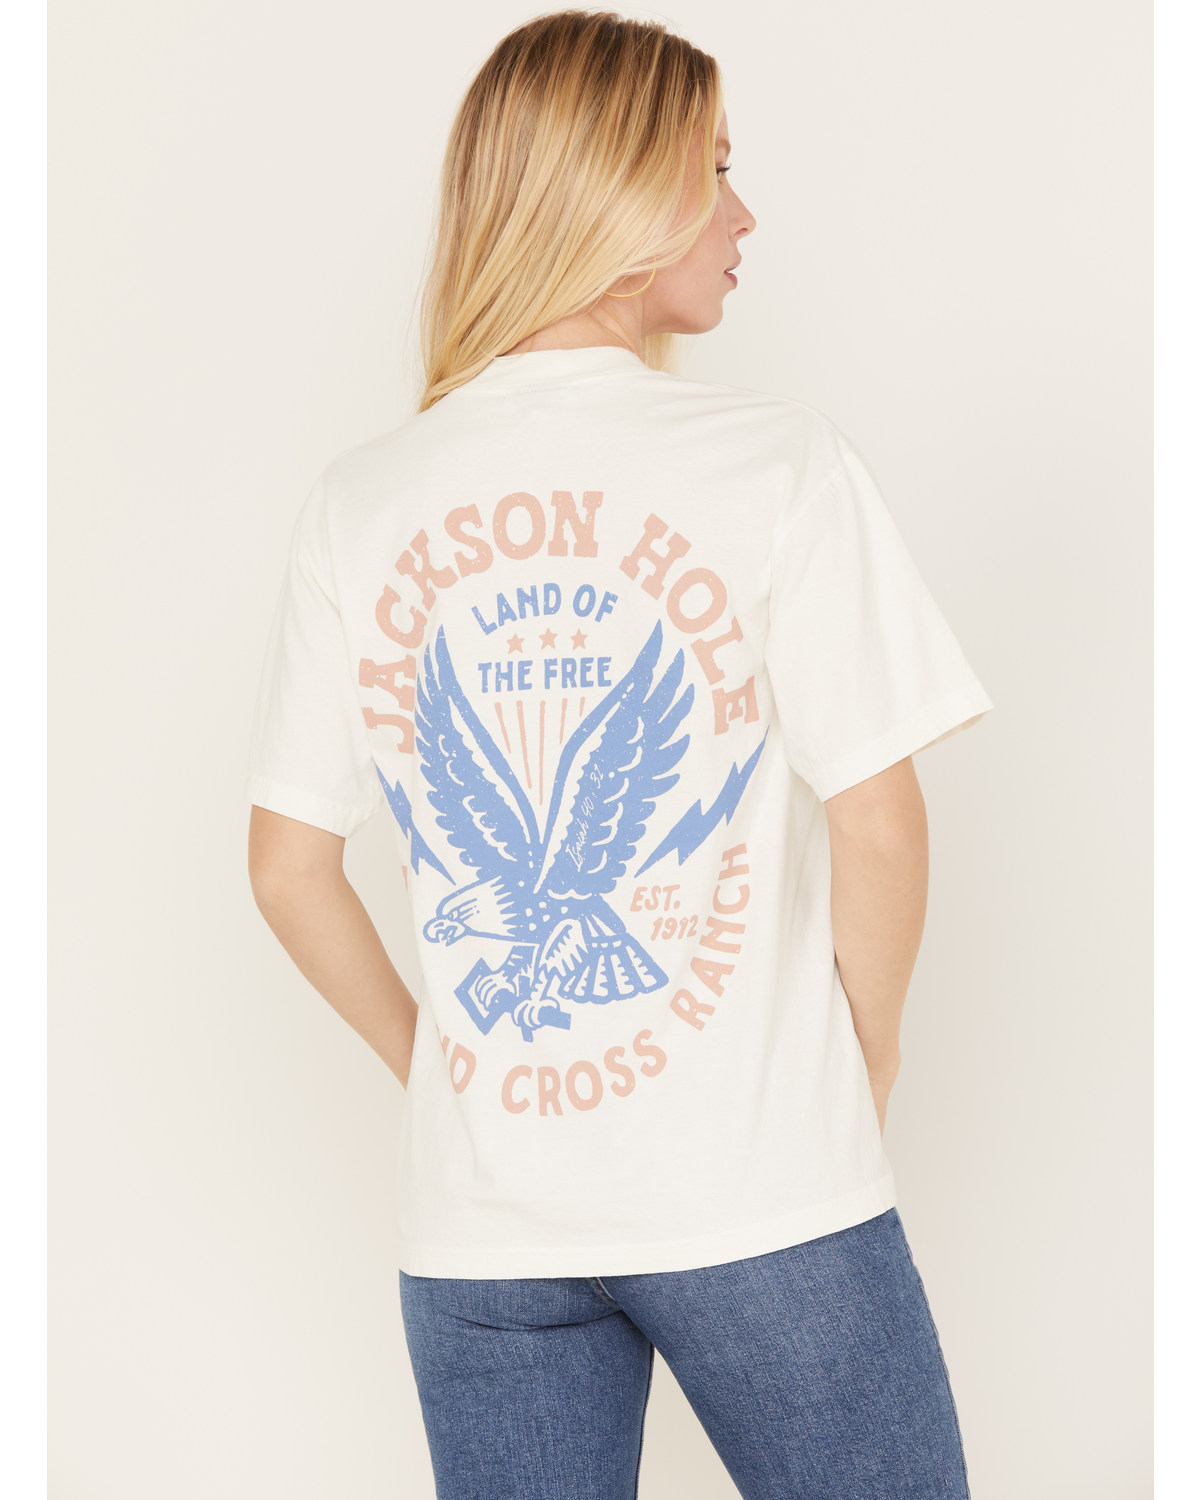 Diamond Cross Ranch Women's Eagle Hi Flyer Short Sleeve Graphic Tee